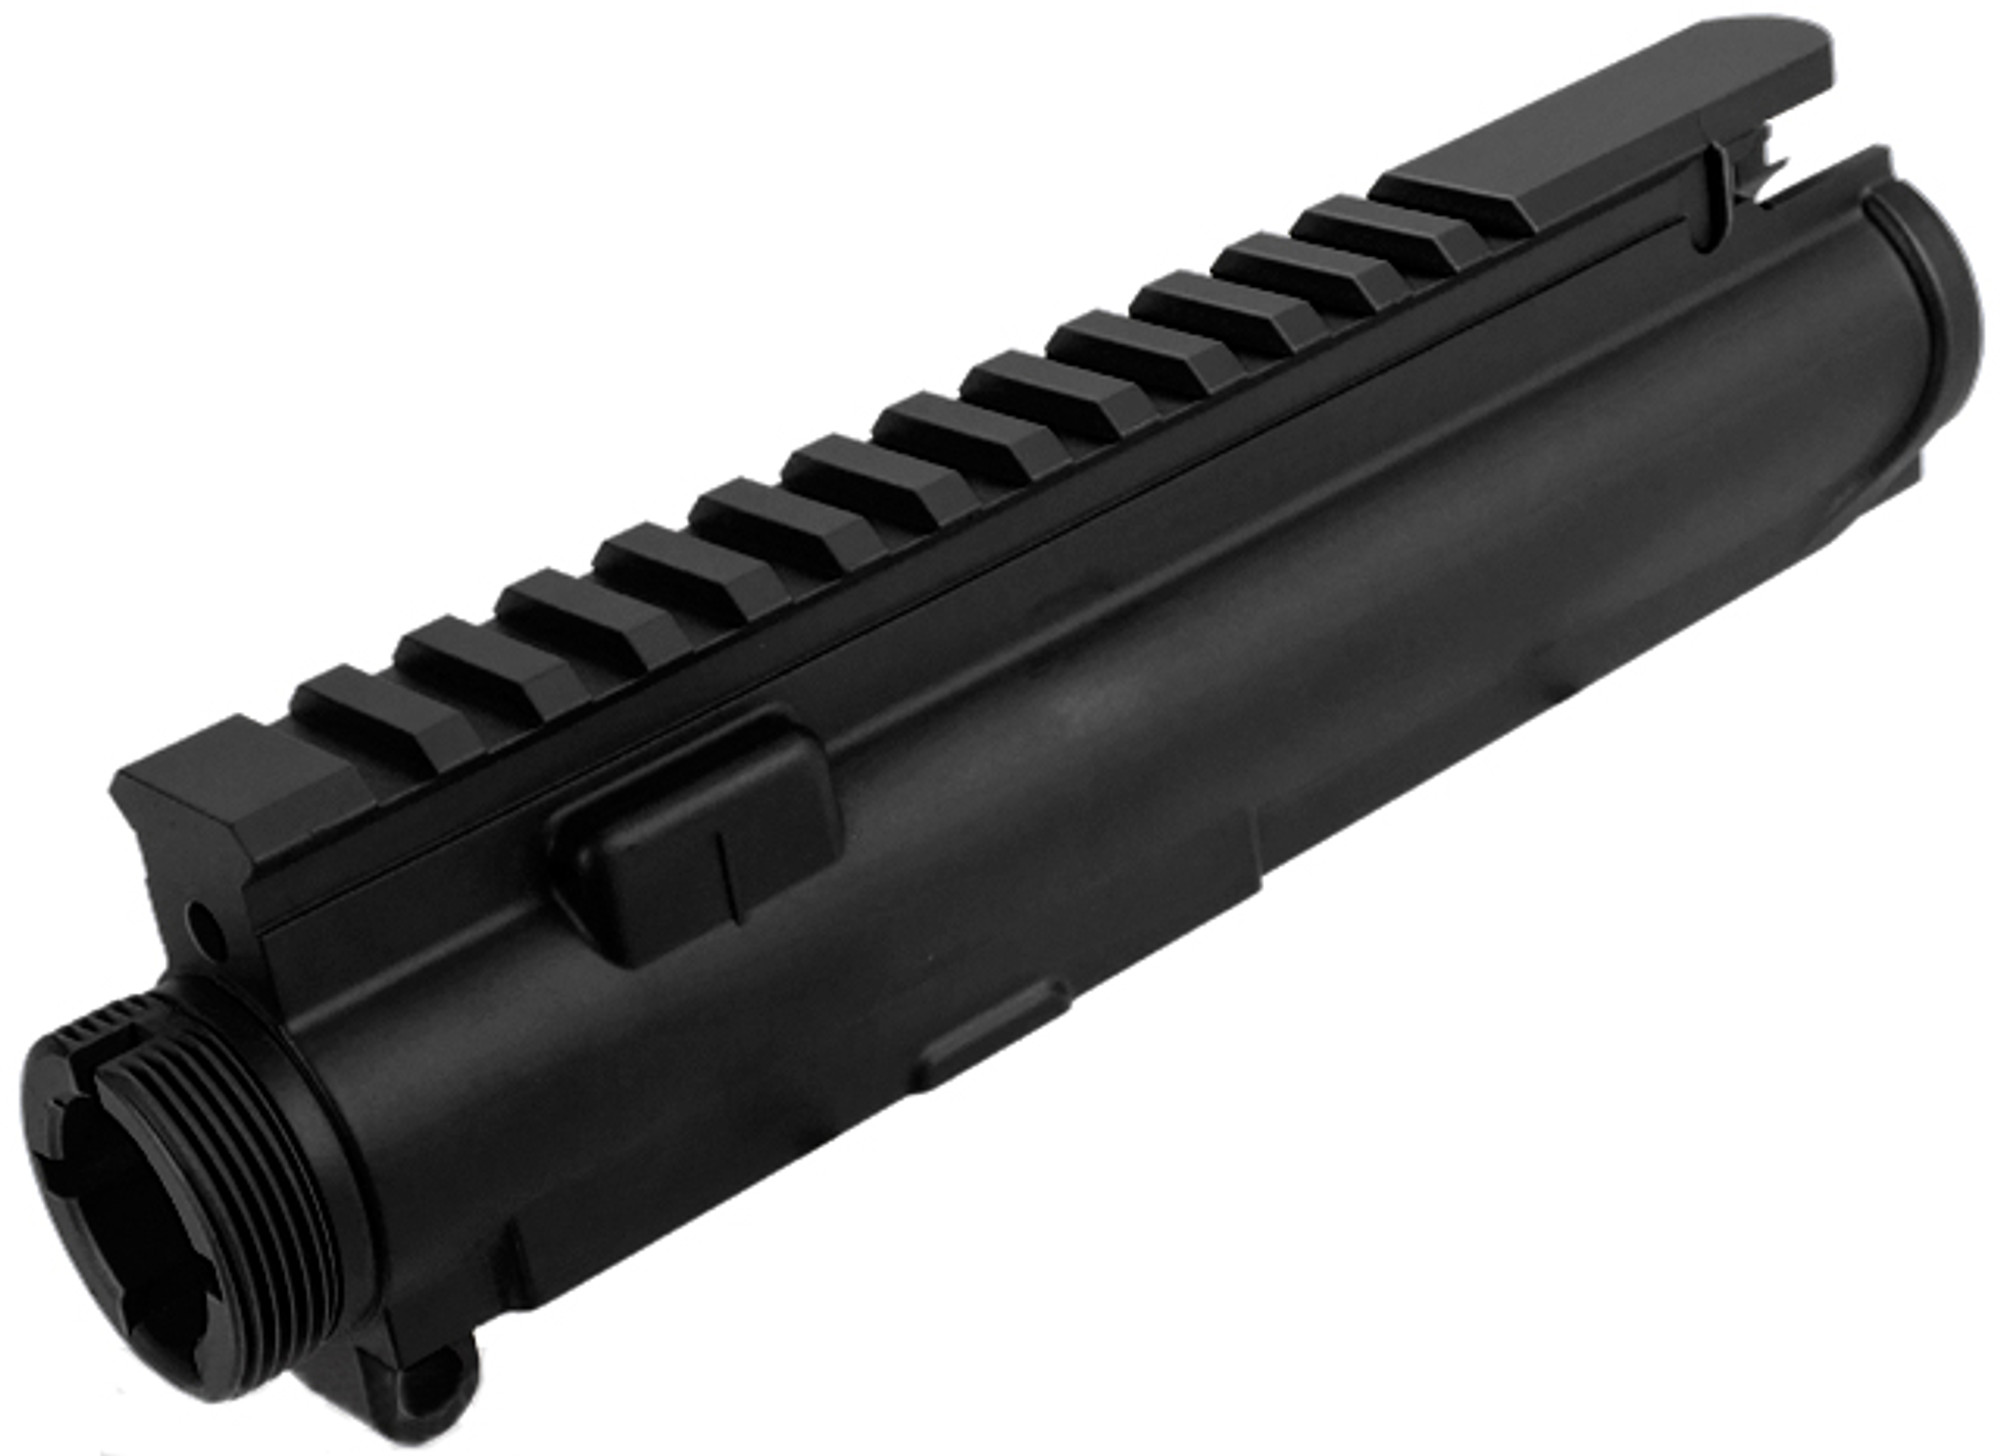 G&G Upper Receiver For G&G Blowback M4 Series Airsoft AEG Rifles (Color: Black)